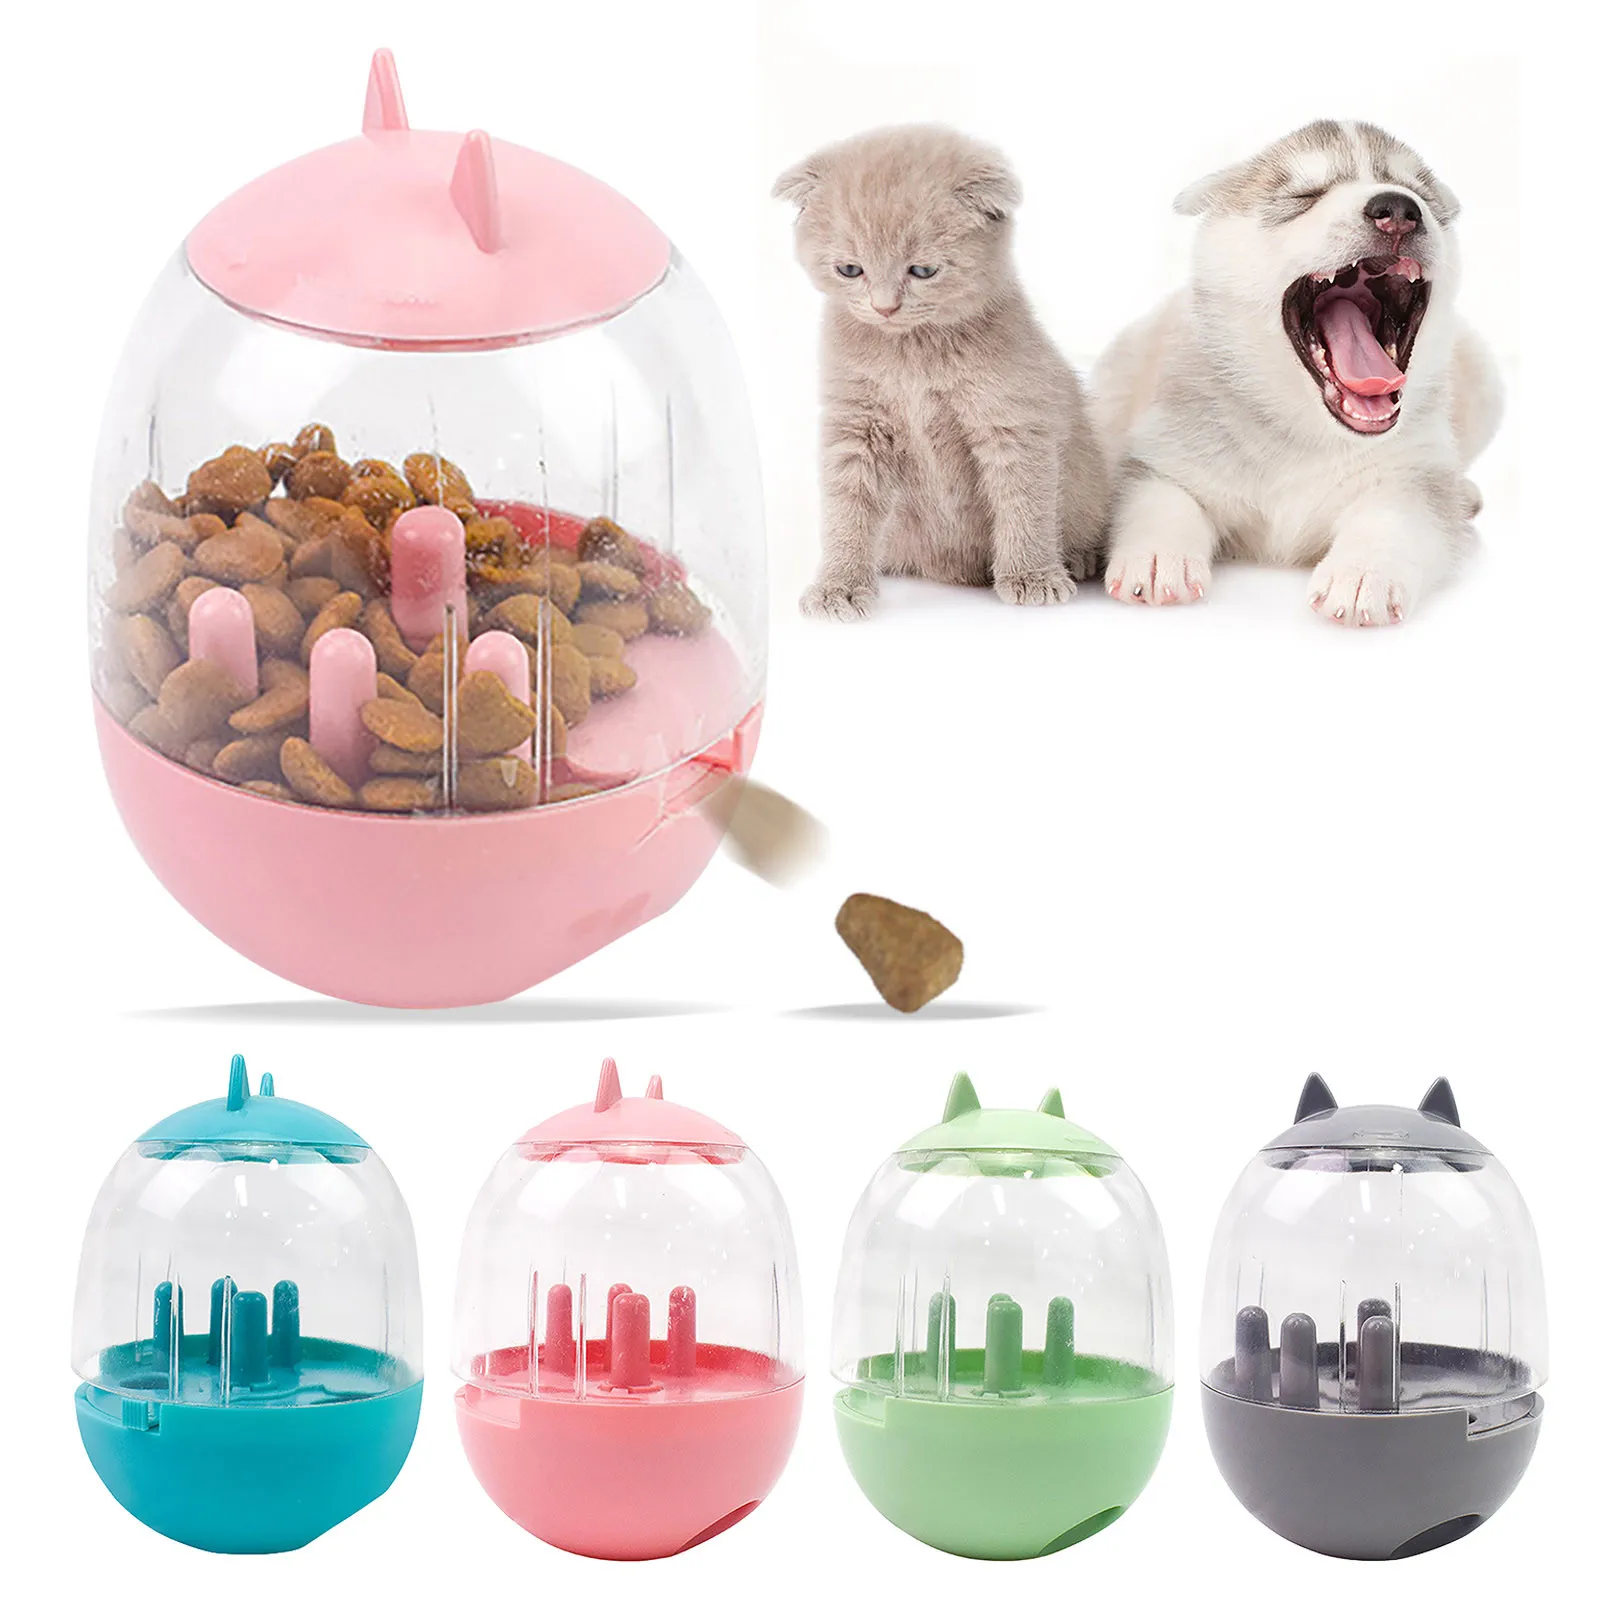 

Pet Dog Toy Food Dispenser Ball Cat Tumbler Pet Food Slow Food Pet Dog Toy Food Akcesoria Dla Psów Brinquedos ля Собак